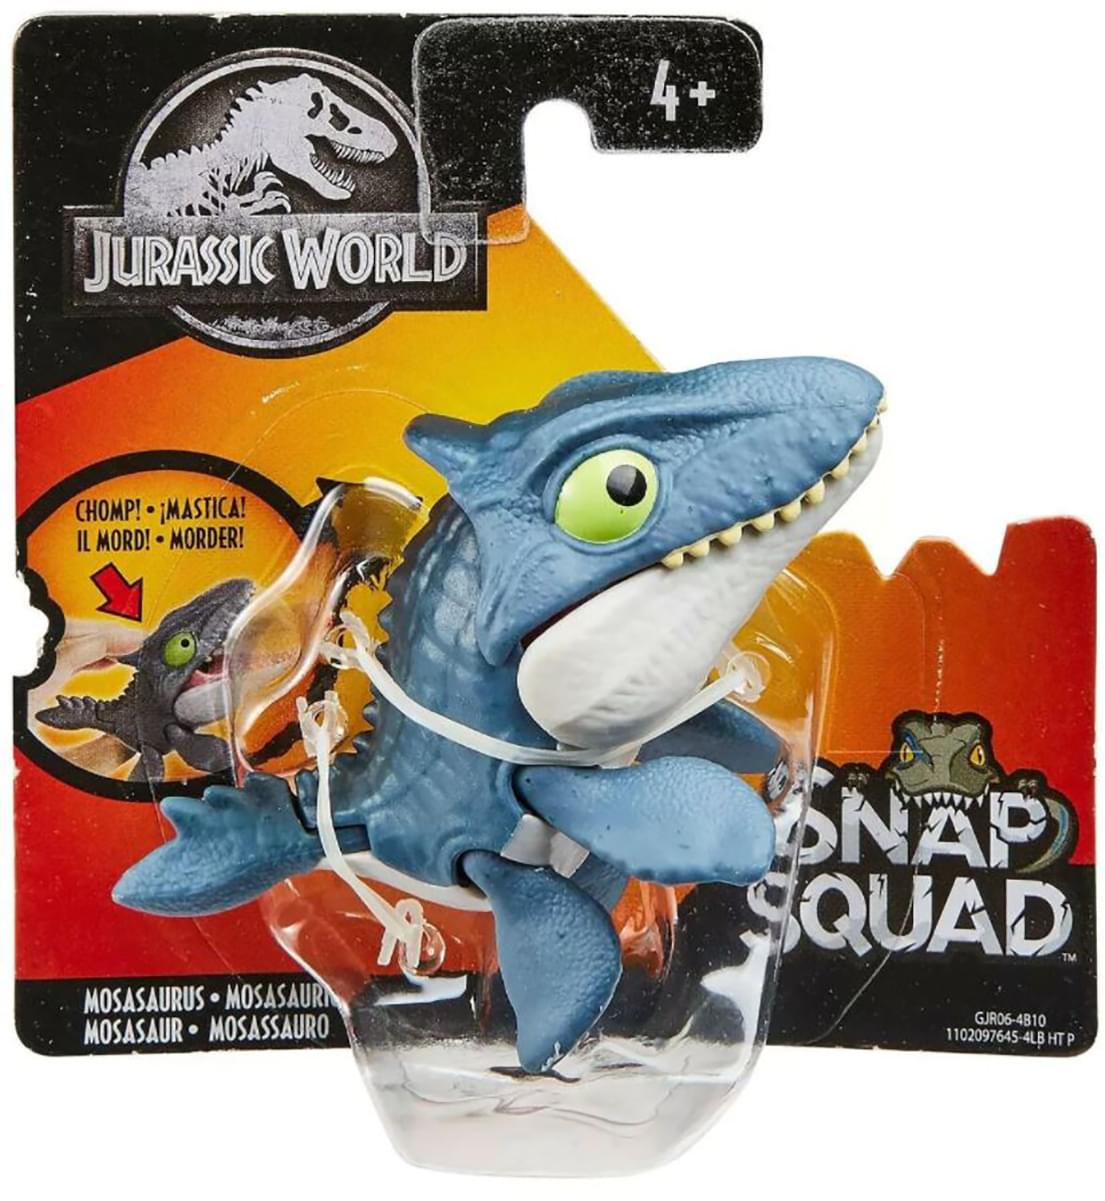 Jurassic World 2 Inch Snap Squad Figure | Mosasaurus